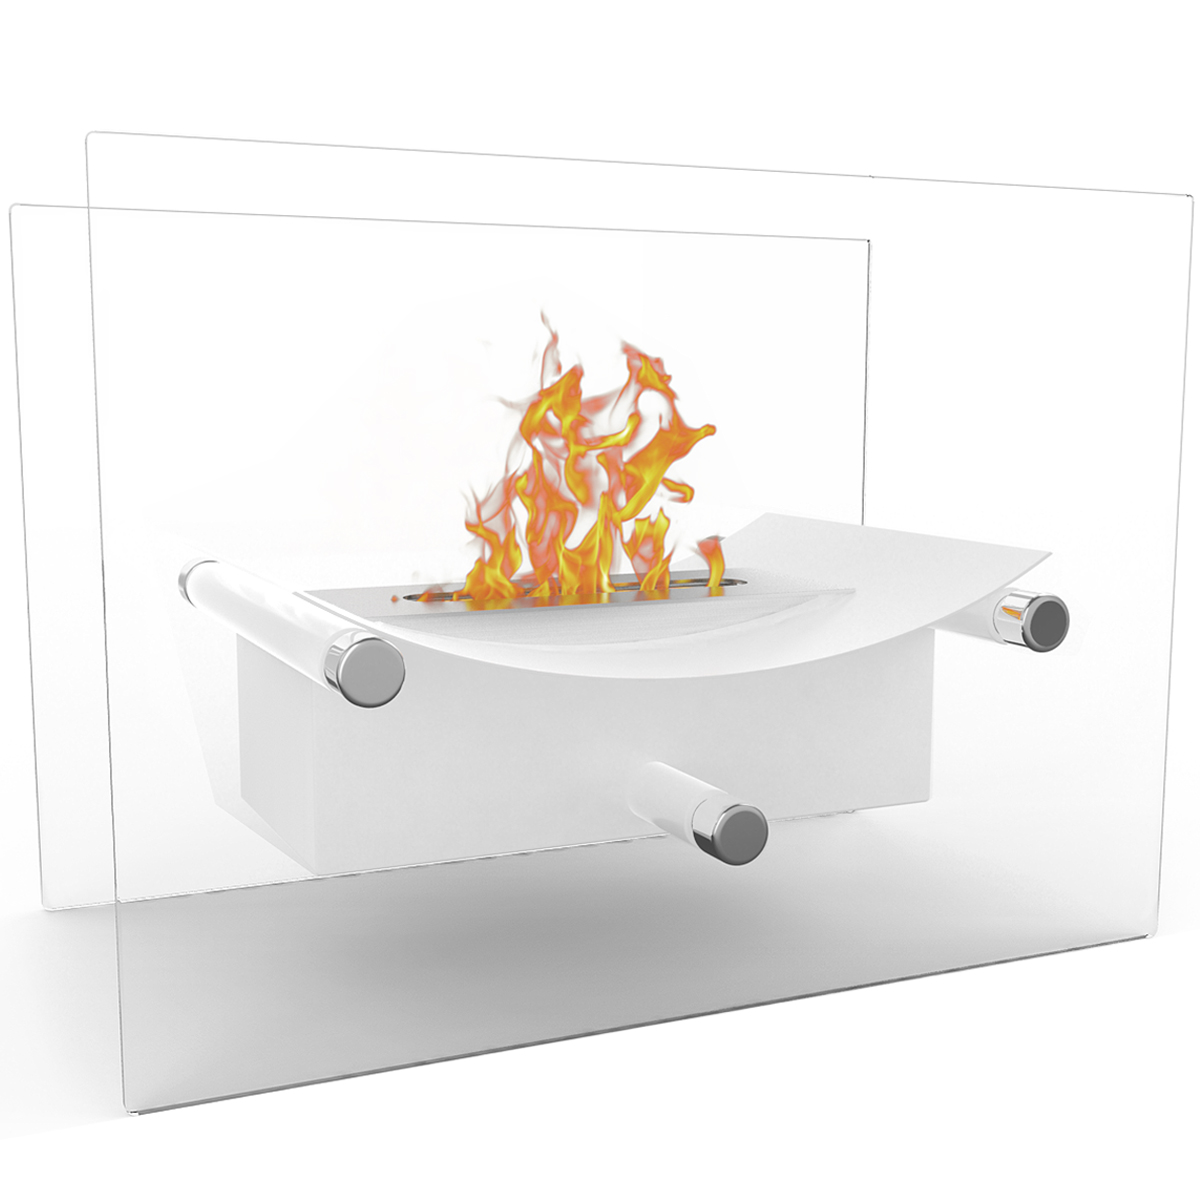 Et7012wht-ef Arkon Tabletop Portable Bio Ethanol Fireplace In White